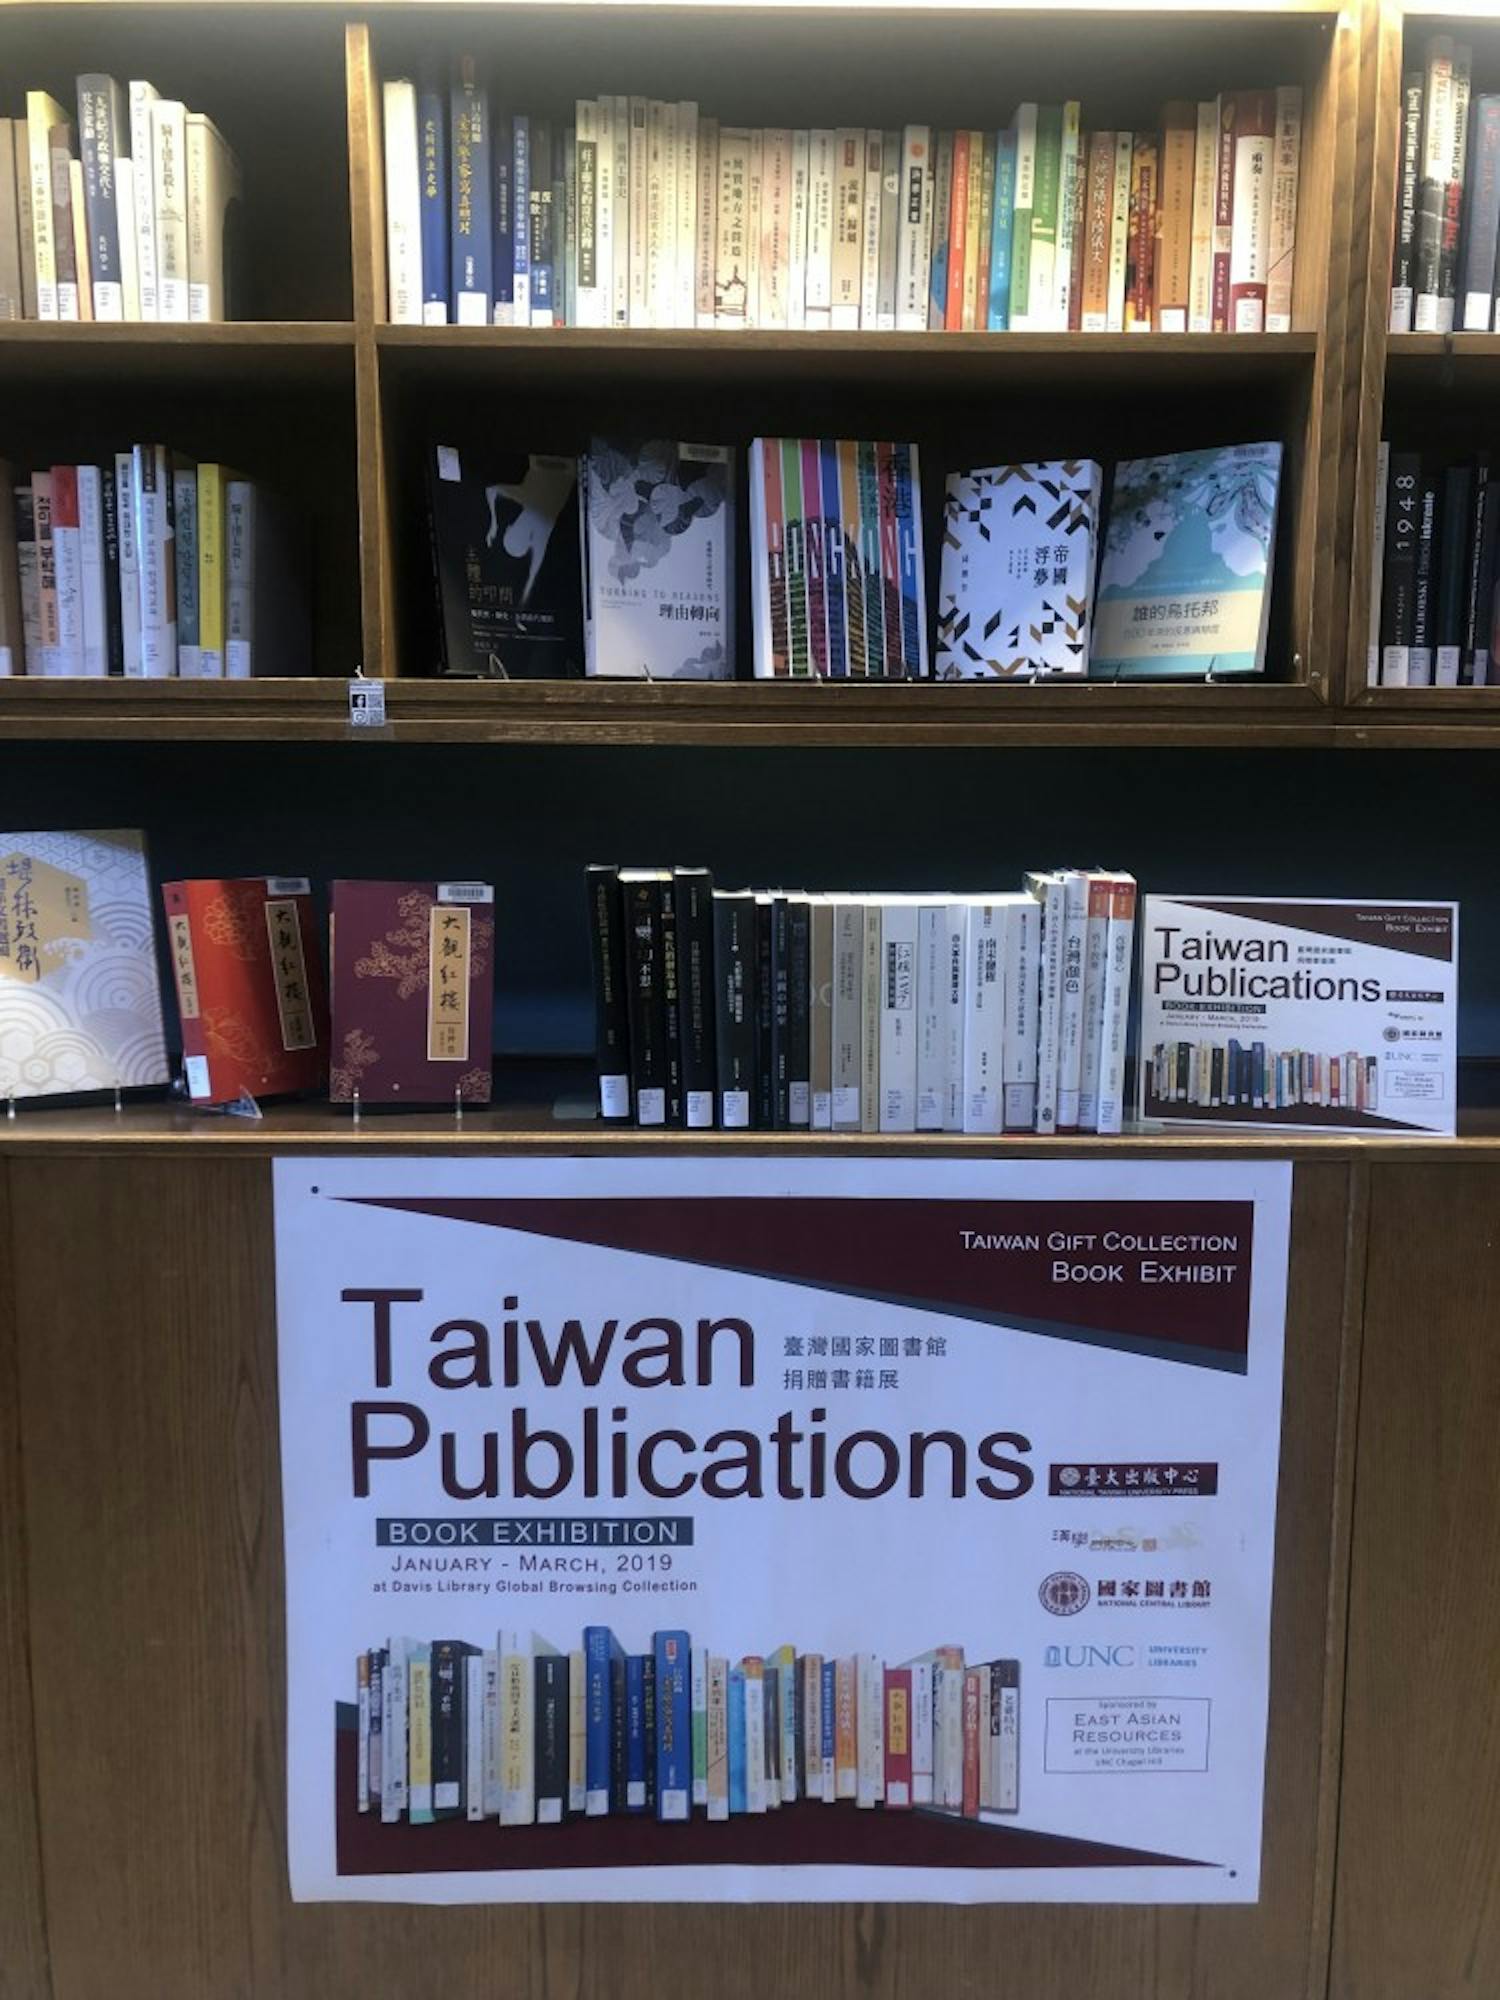 Taiwan Publications